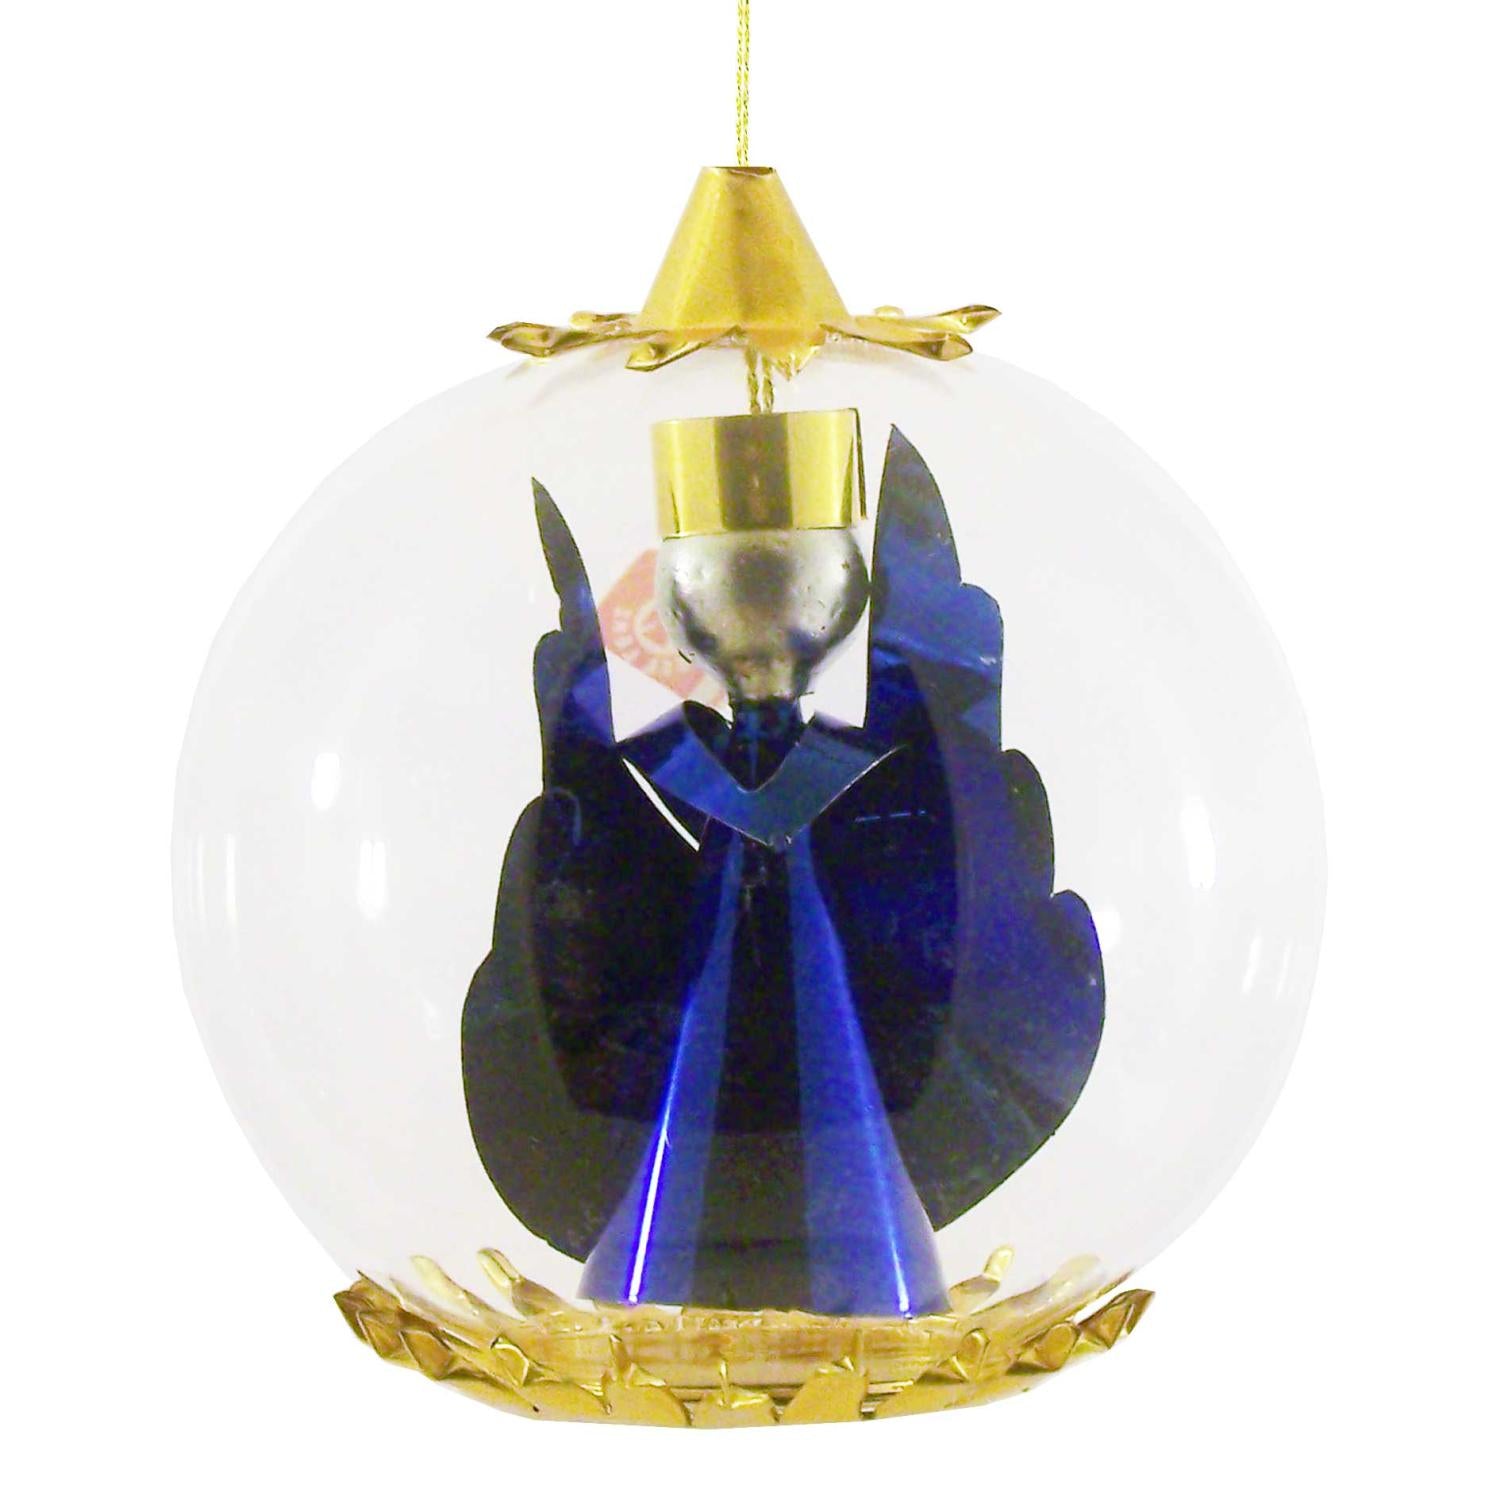 Blue Angel Ornament, large  by Resl Lenz